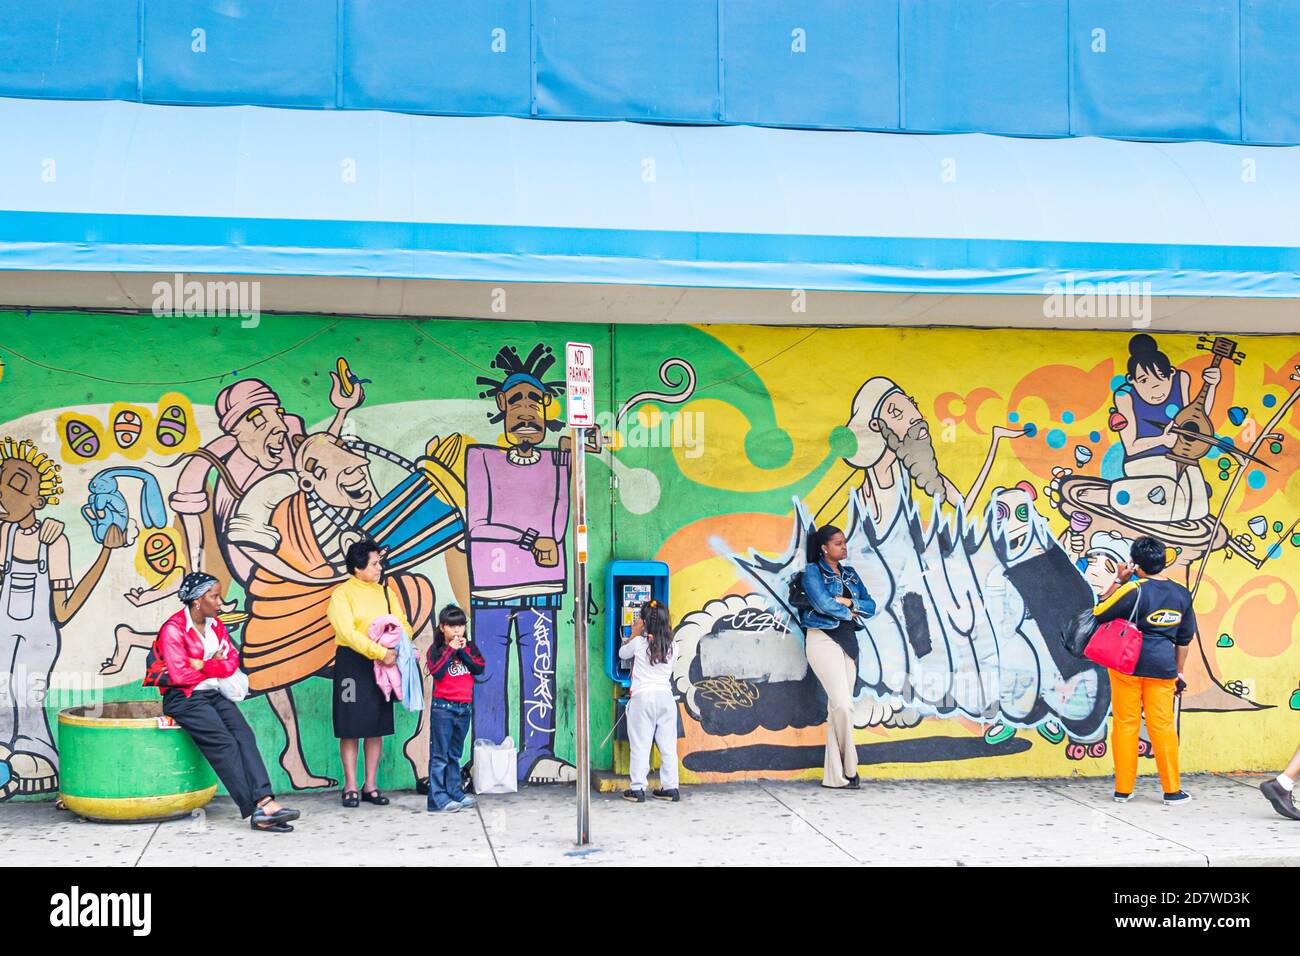 Miami Florida,Flagler Street bus stop,mural public art artwork painting, Stock Photo